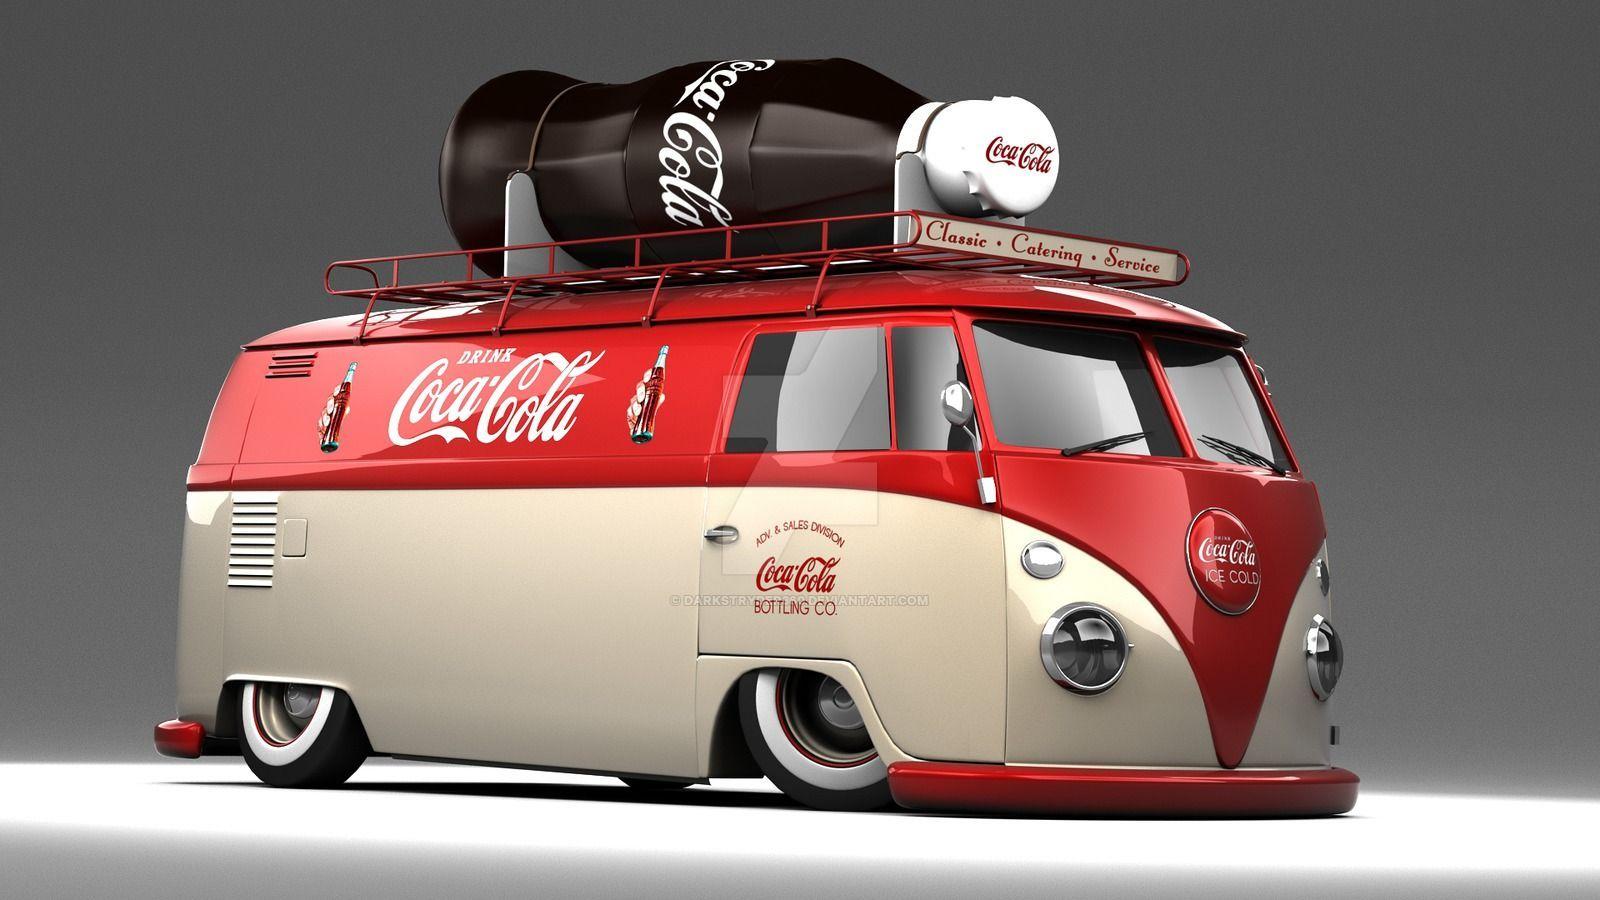 VW. Coca Cola, Cola and Vw